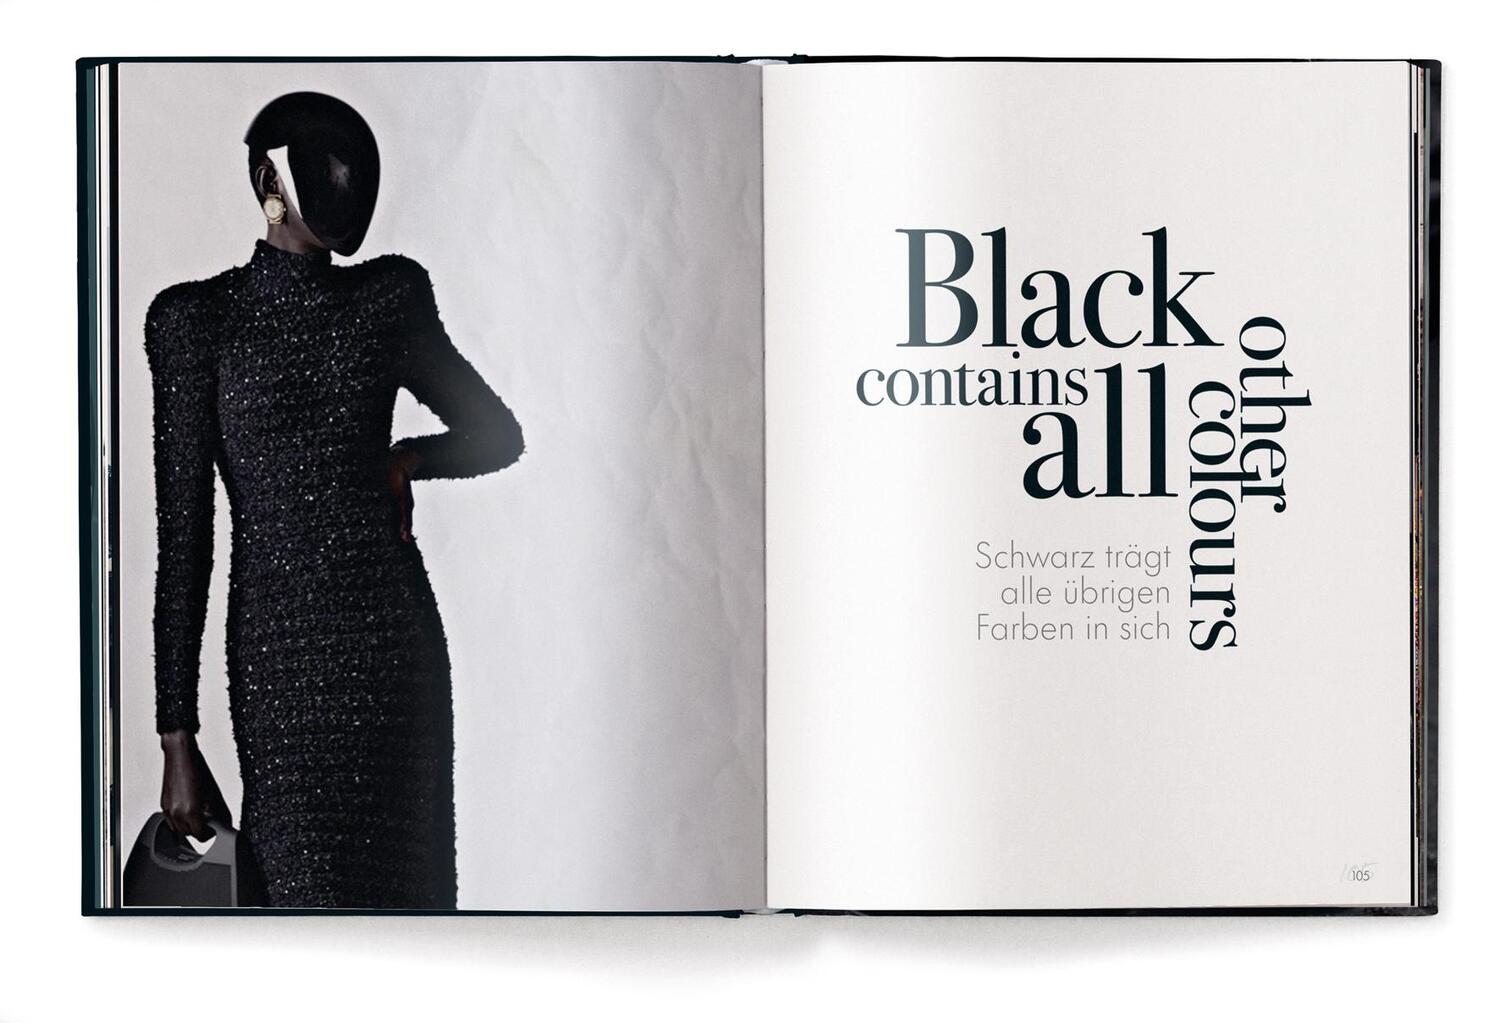 Bild: 9783961715619 | The Black Book | Fashion, Styles &amp; Stories | Christiansen (u. a.)